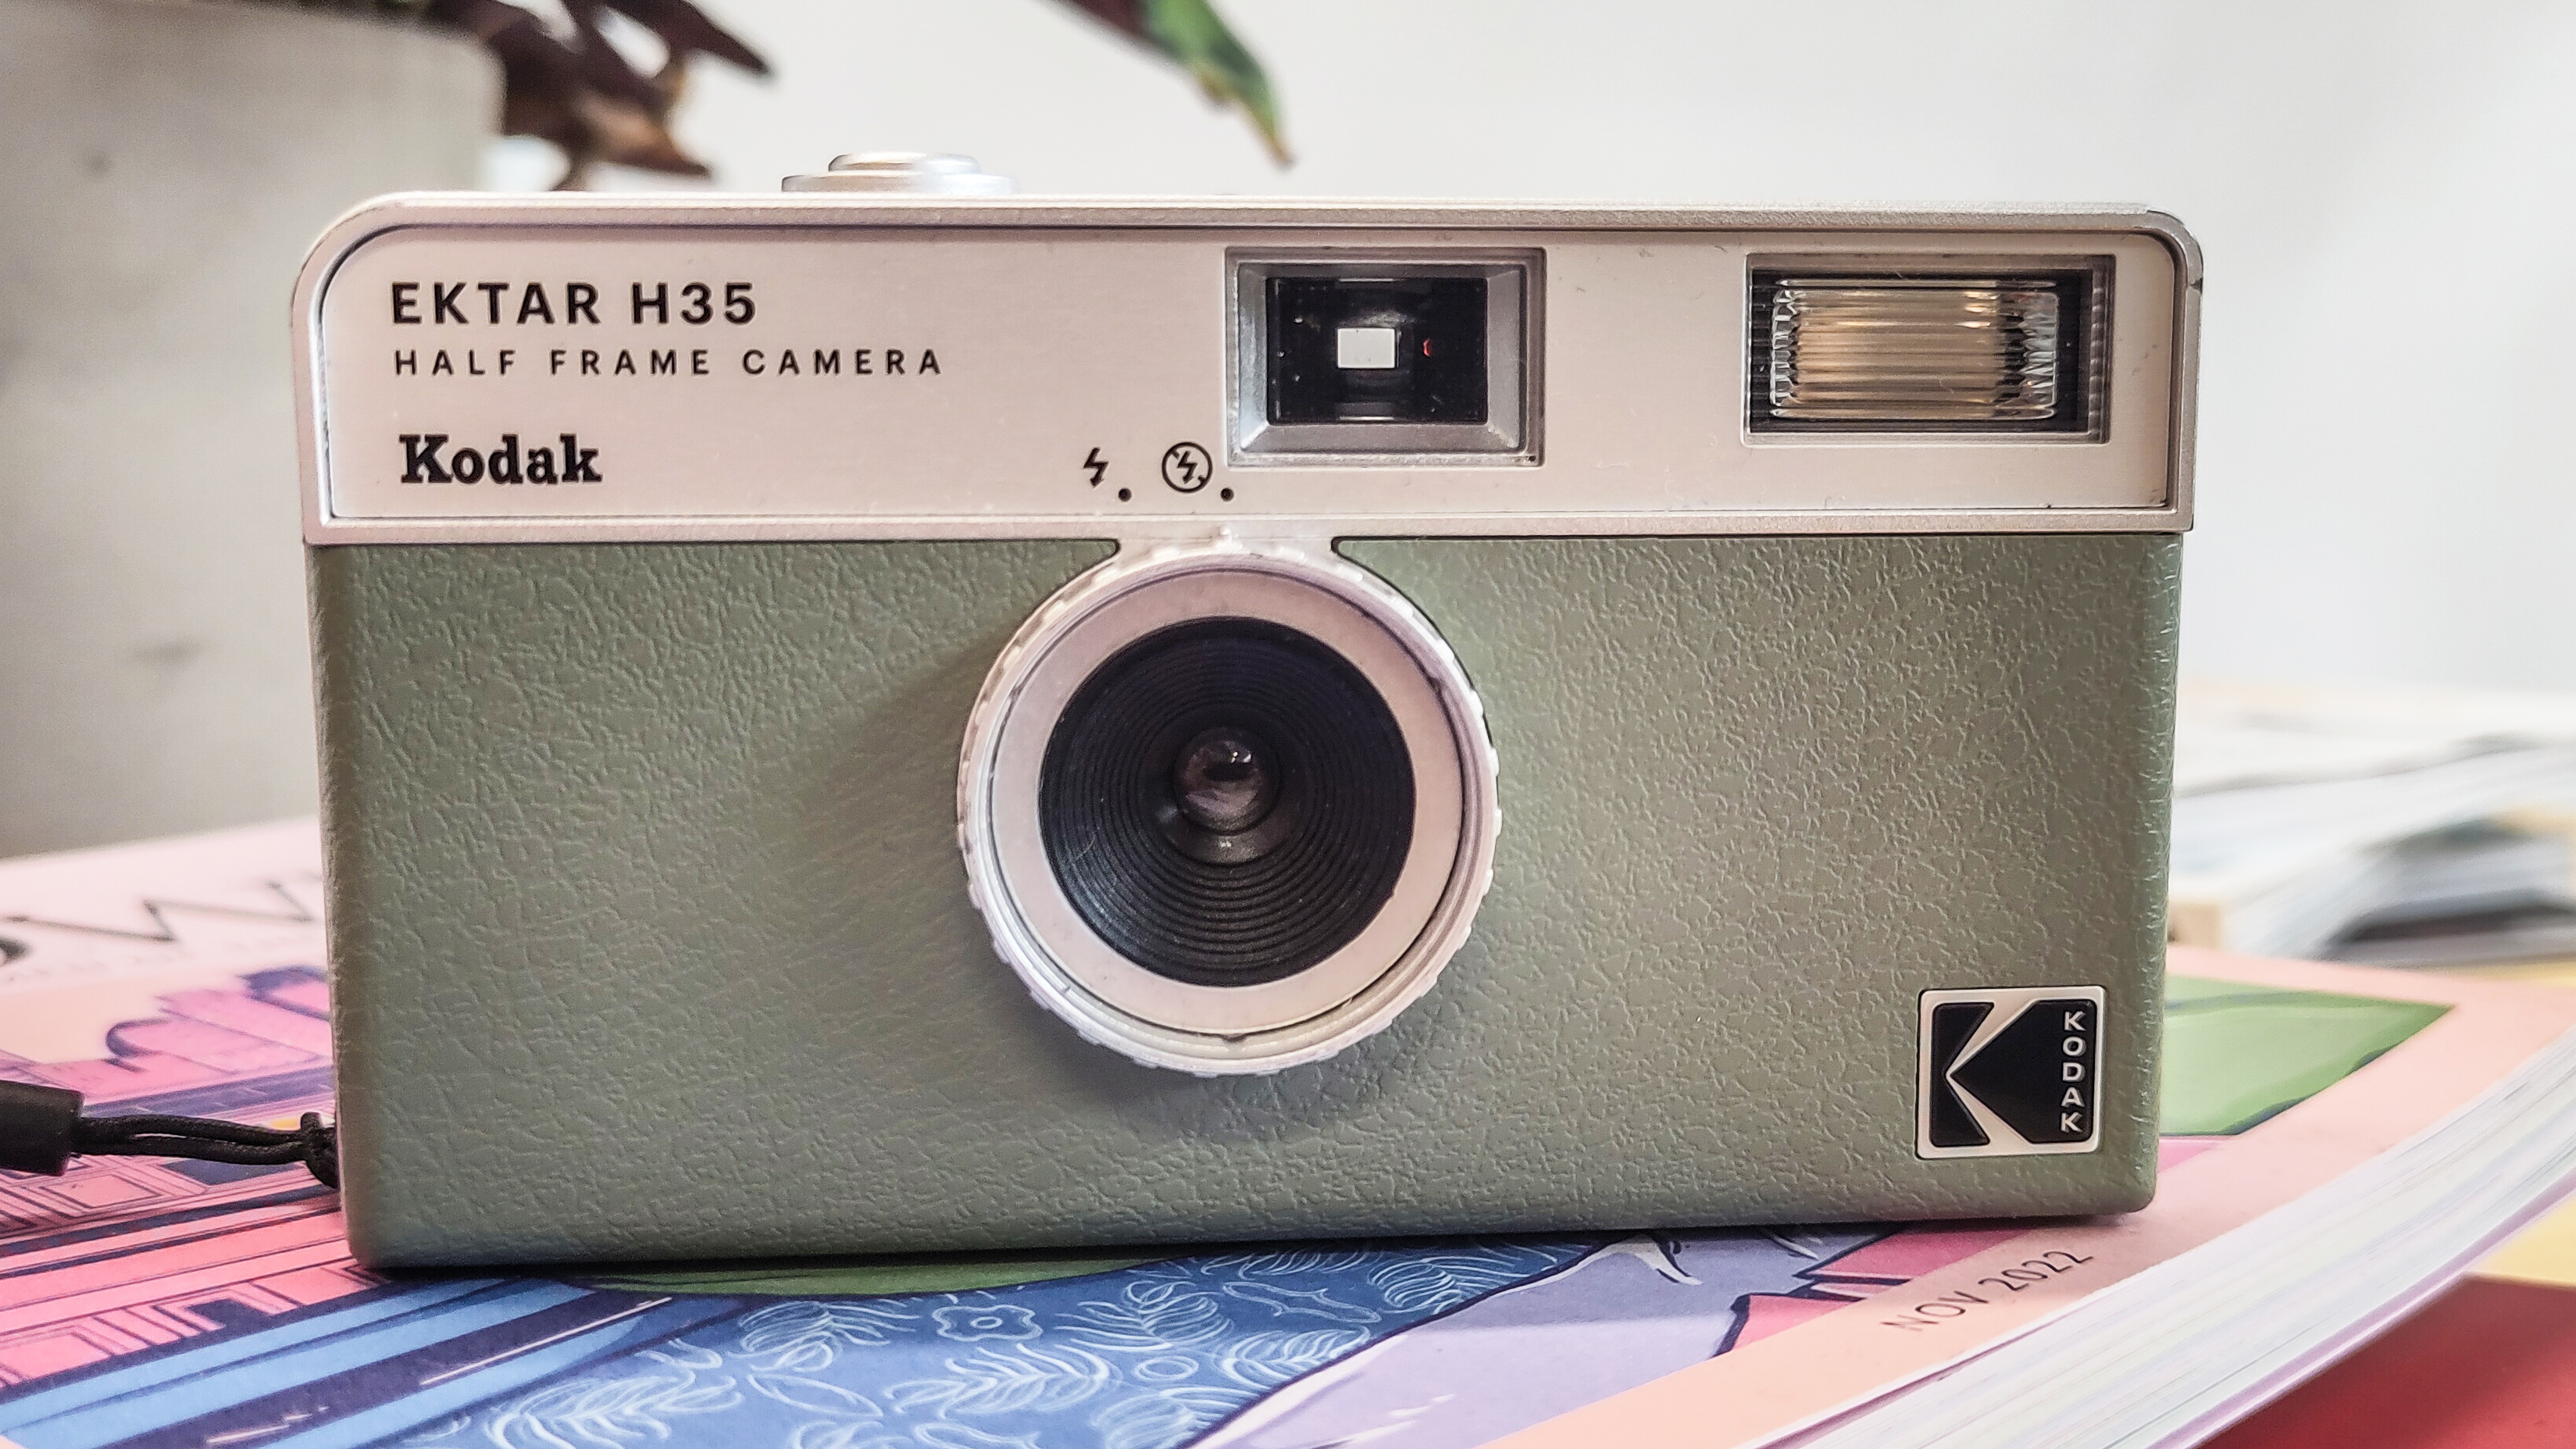 كاميرا كوداك إكتار H35 نصف إطار